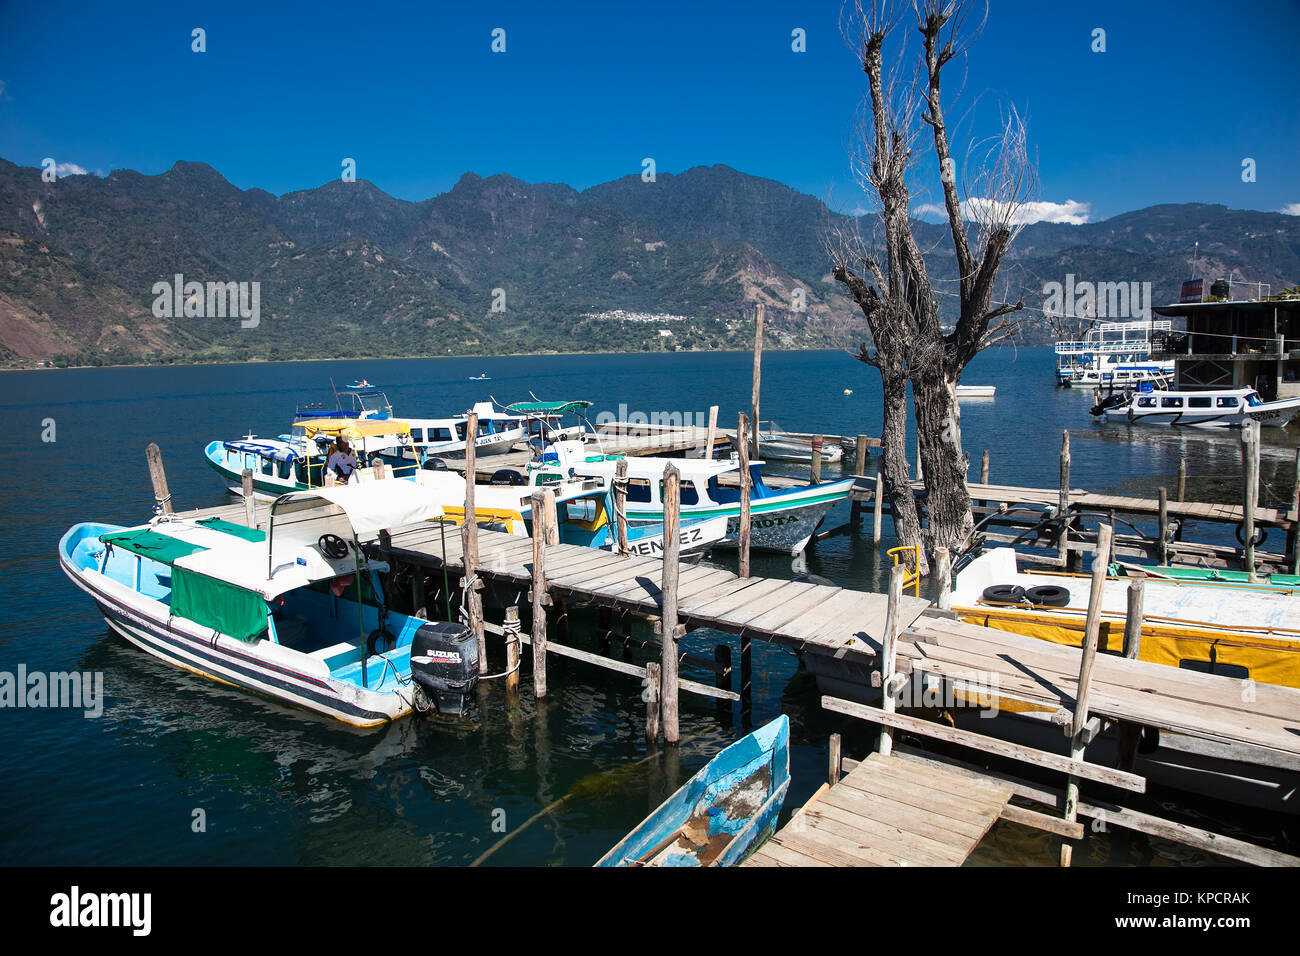 SAN PEDRO, GUATEMALA-DEC 24, 2015: Boat dock in San Pedro at Lake Atitlan on Dec 24, 2015, Guatemala. Central America. Stock Photo